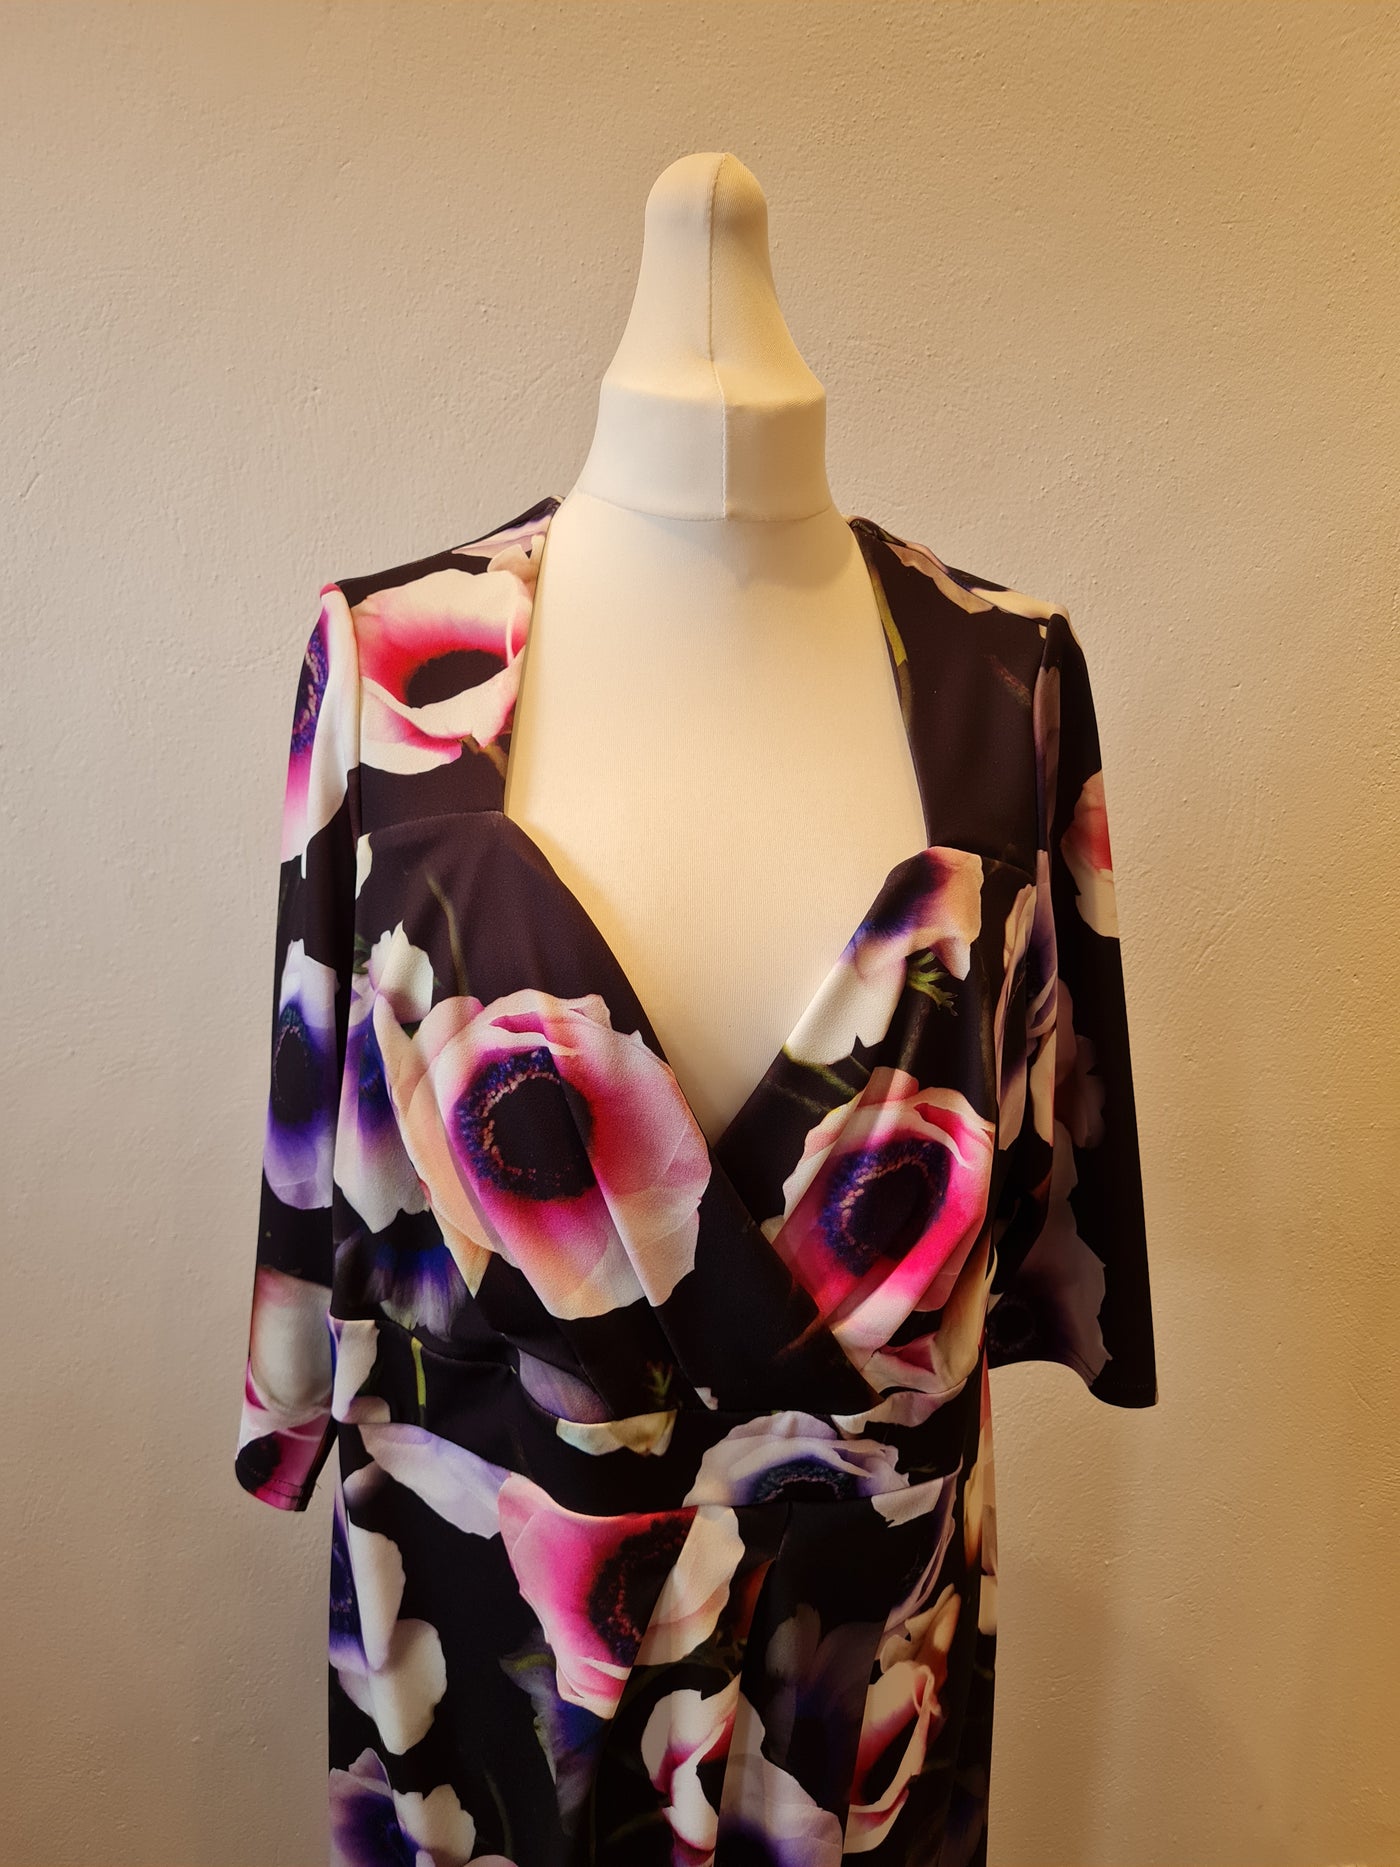 Scarlett &Jo Black & Cerise Floral Dress size 24 New